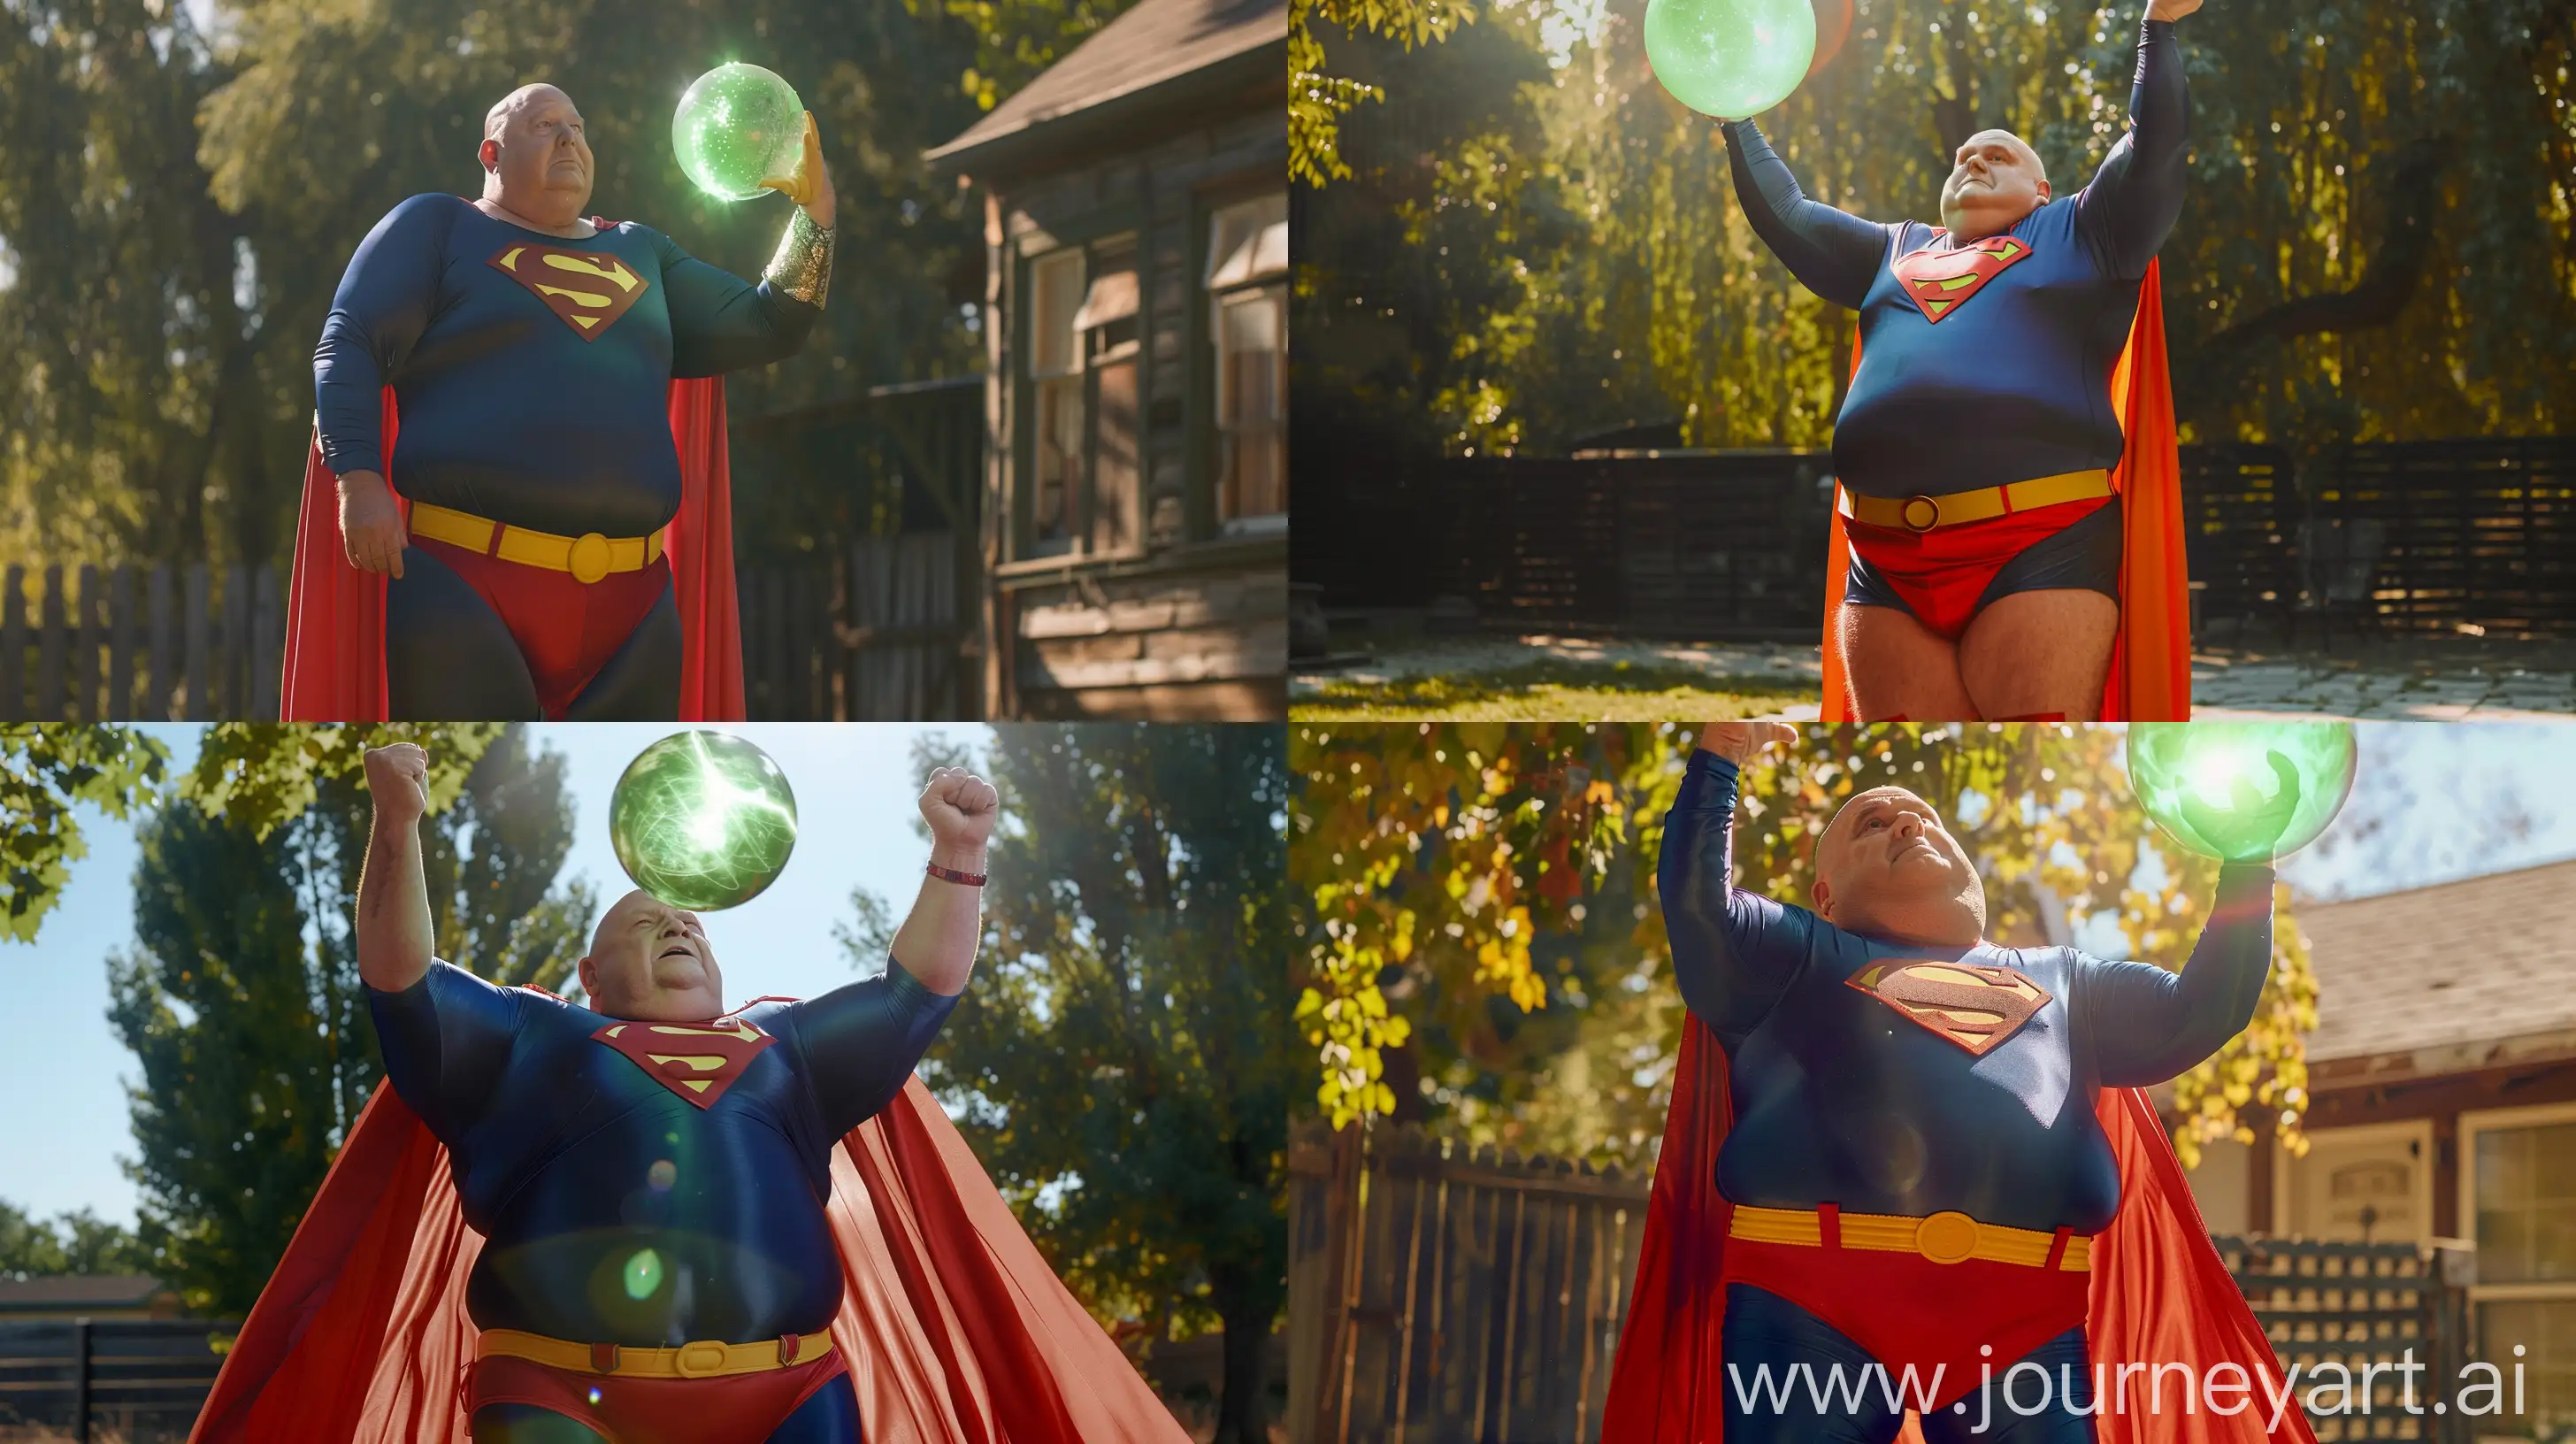 Senior-Gentleman-as-Superhero-in-Vibrant-Costume-Lifting-Illusionary-Orb